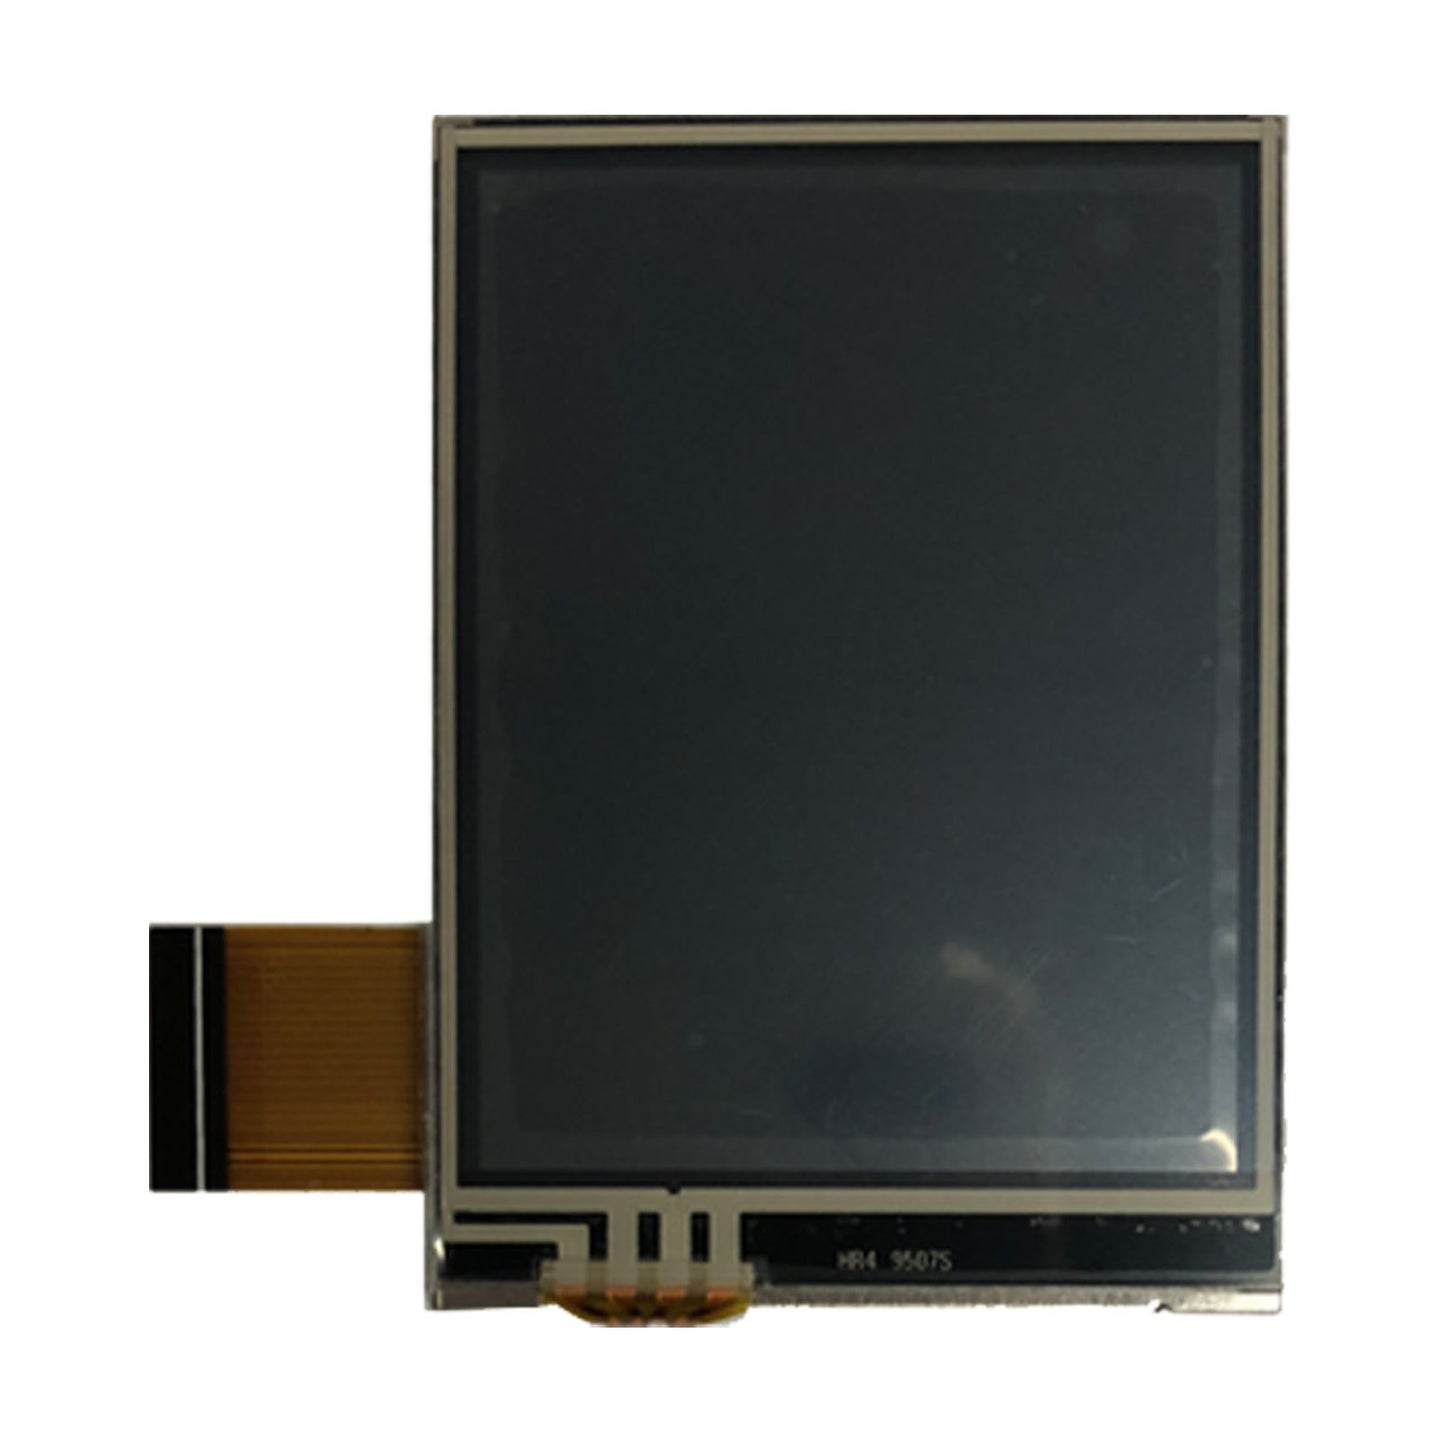 DisplayModule 2.4" 240X320 Transflective Display Panel with Resistive Touch – MCU/SPI/RGB